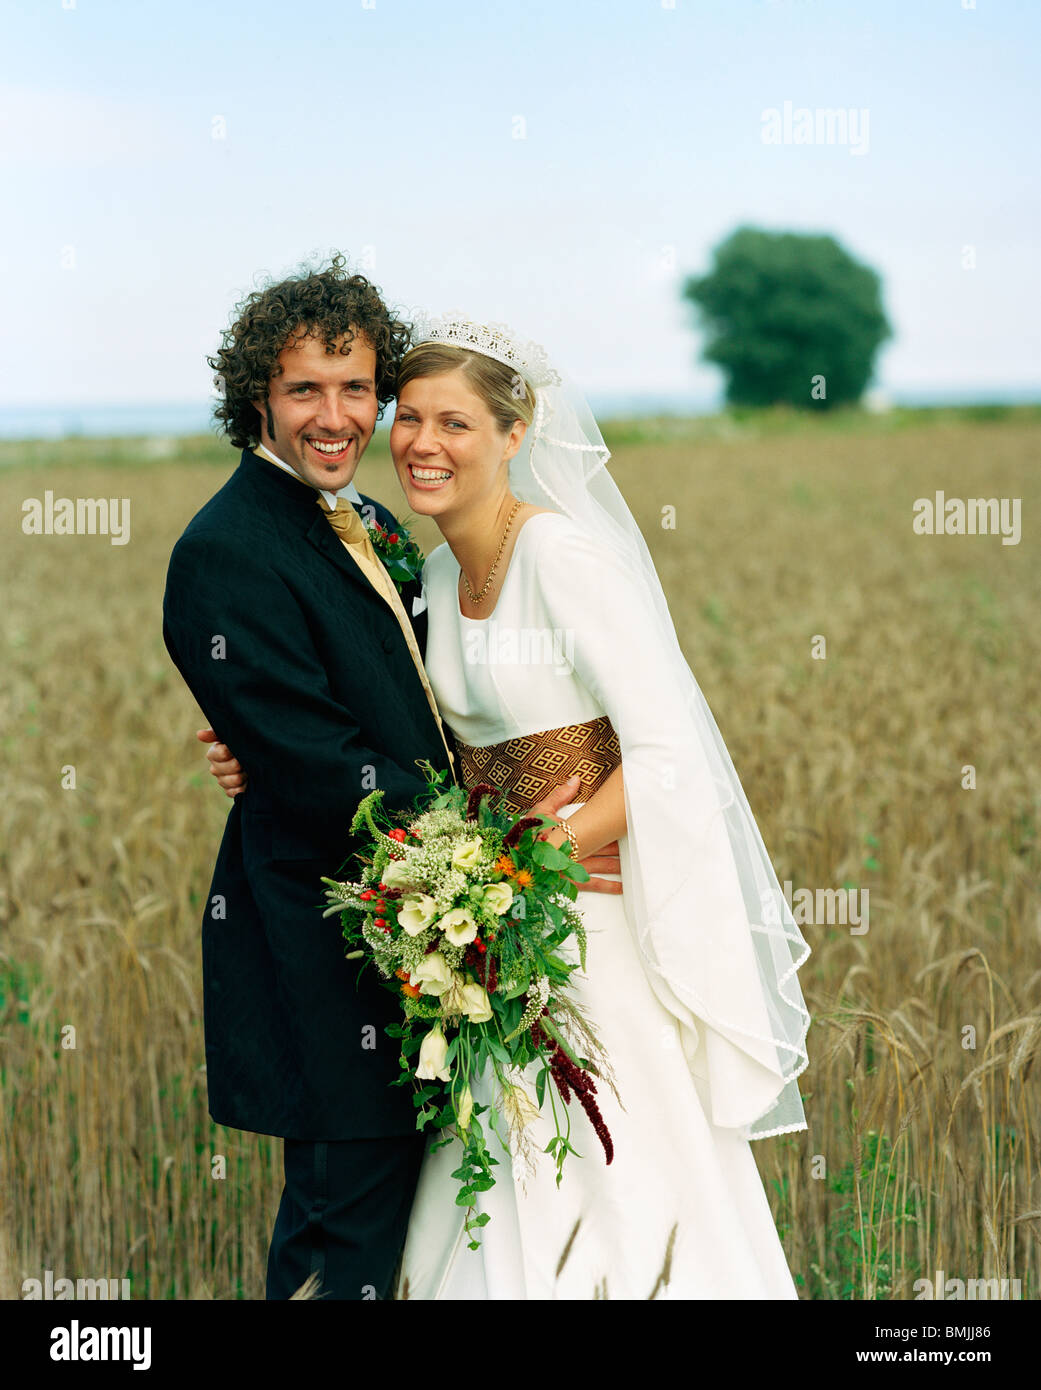 Scandinavia, Sweden, Oland, Bride and groom standing in field, smiling, portrait Stock Photo